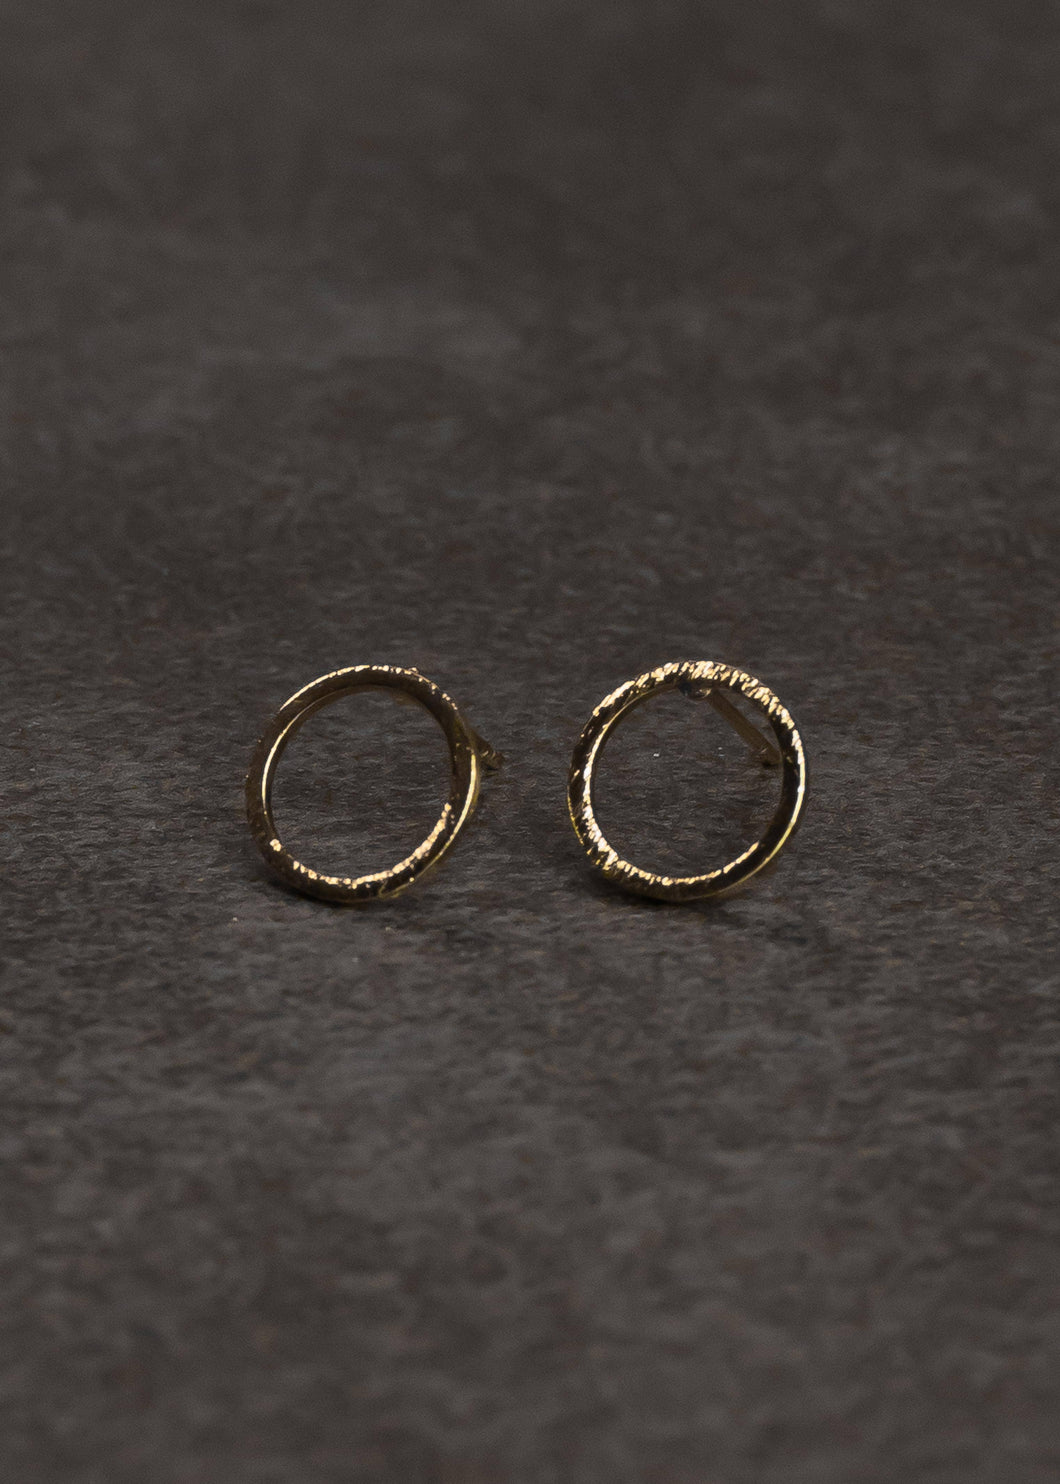 Open circle stud earrings in gold